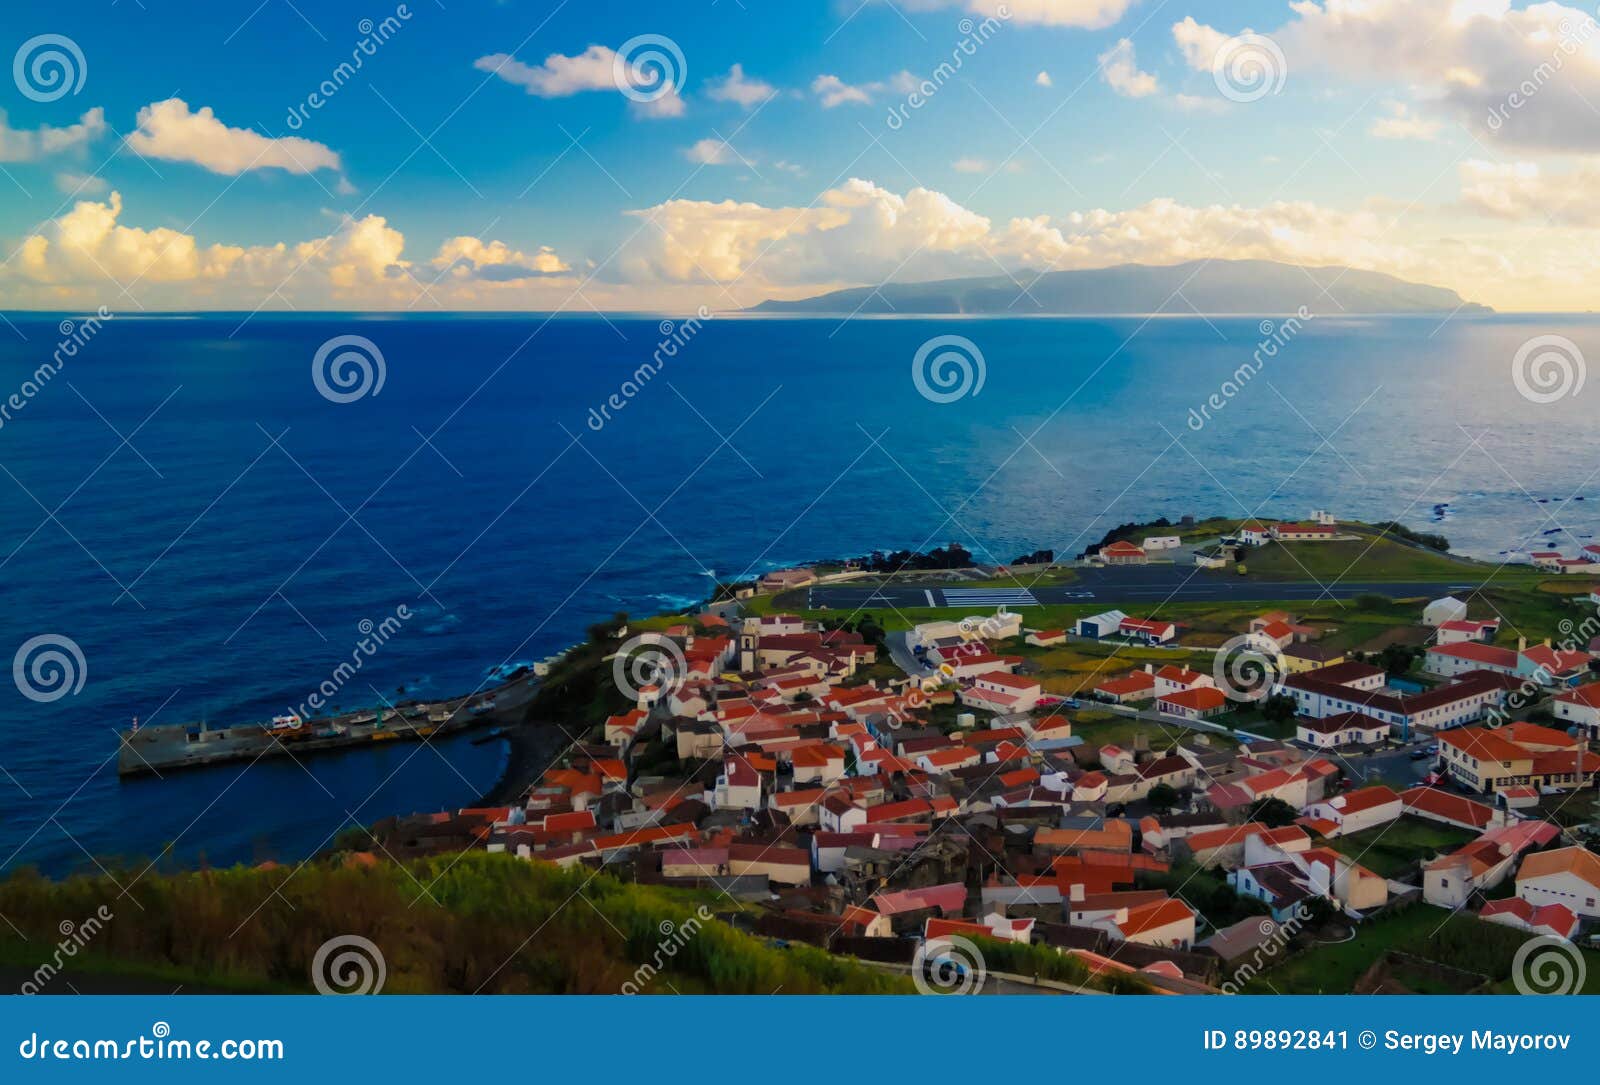 aerial view to vila do corvo and flores island at sunset, corvo island, azores, portugal